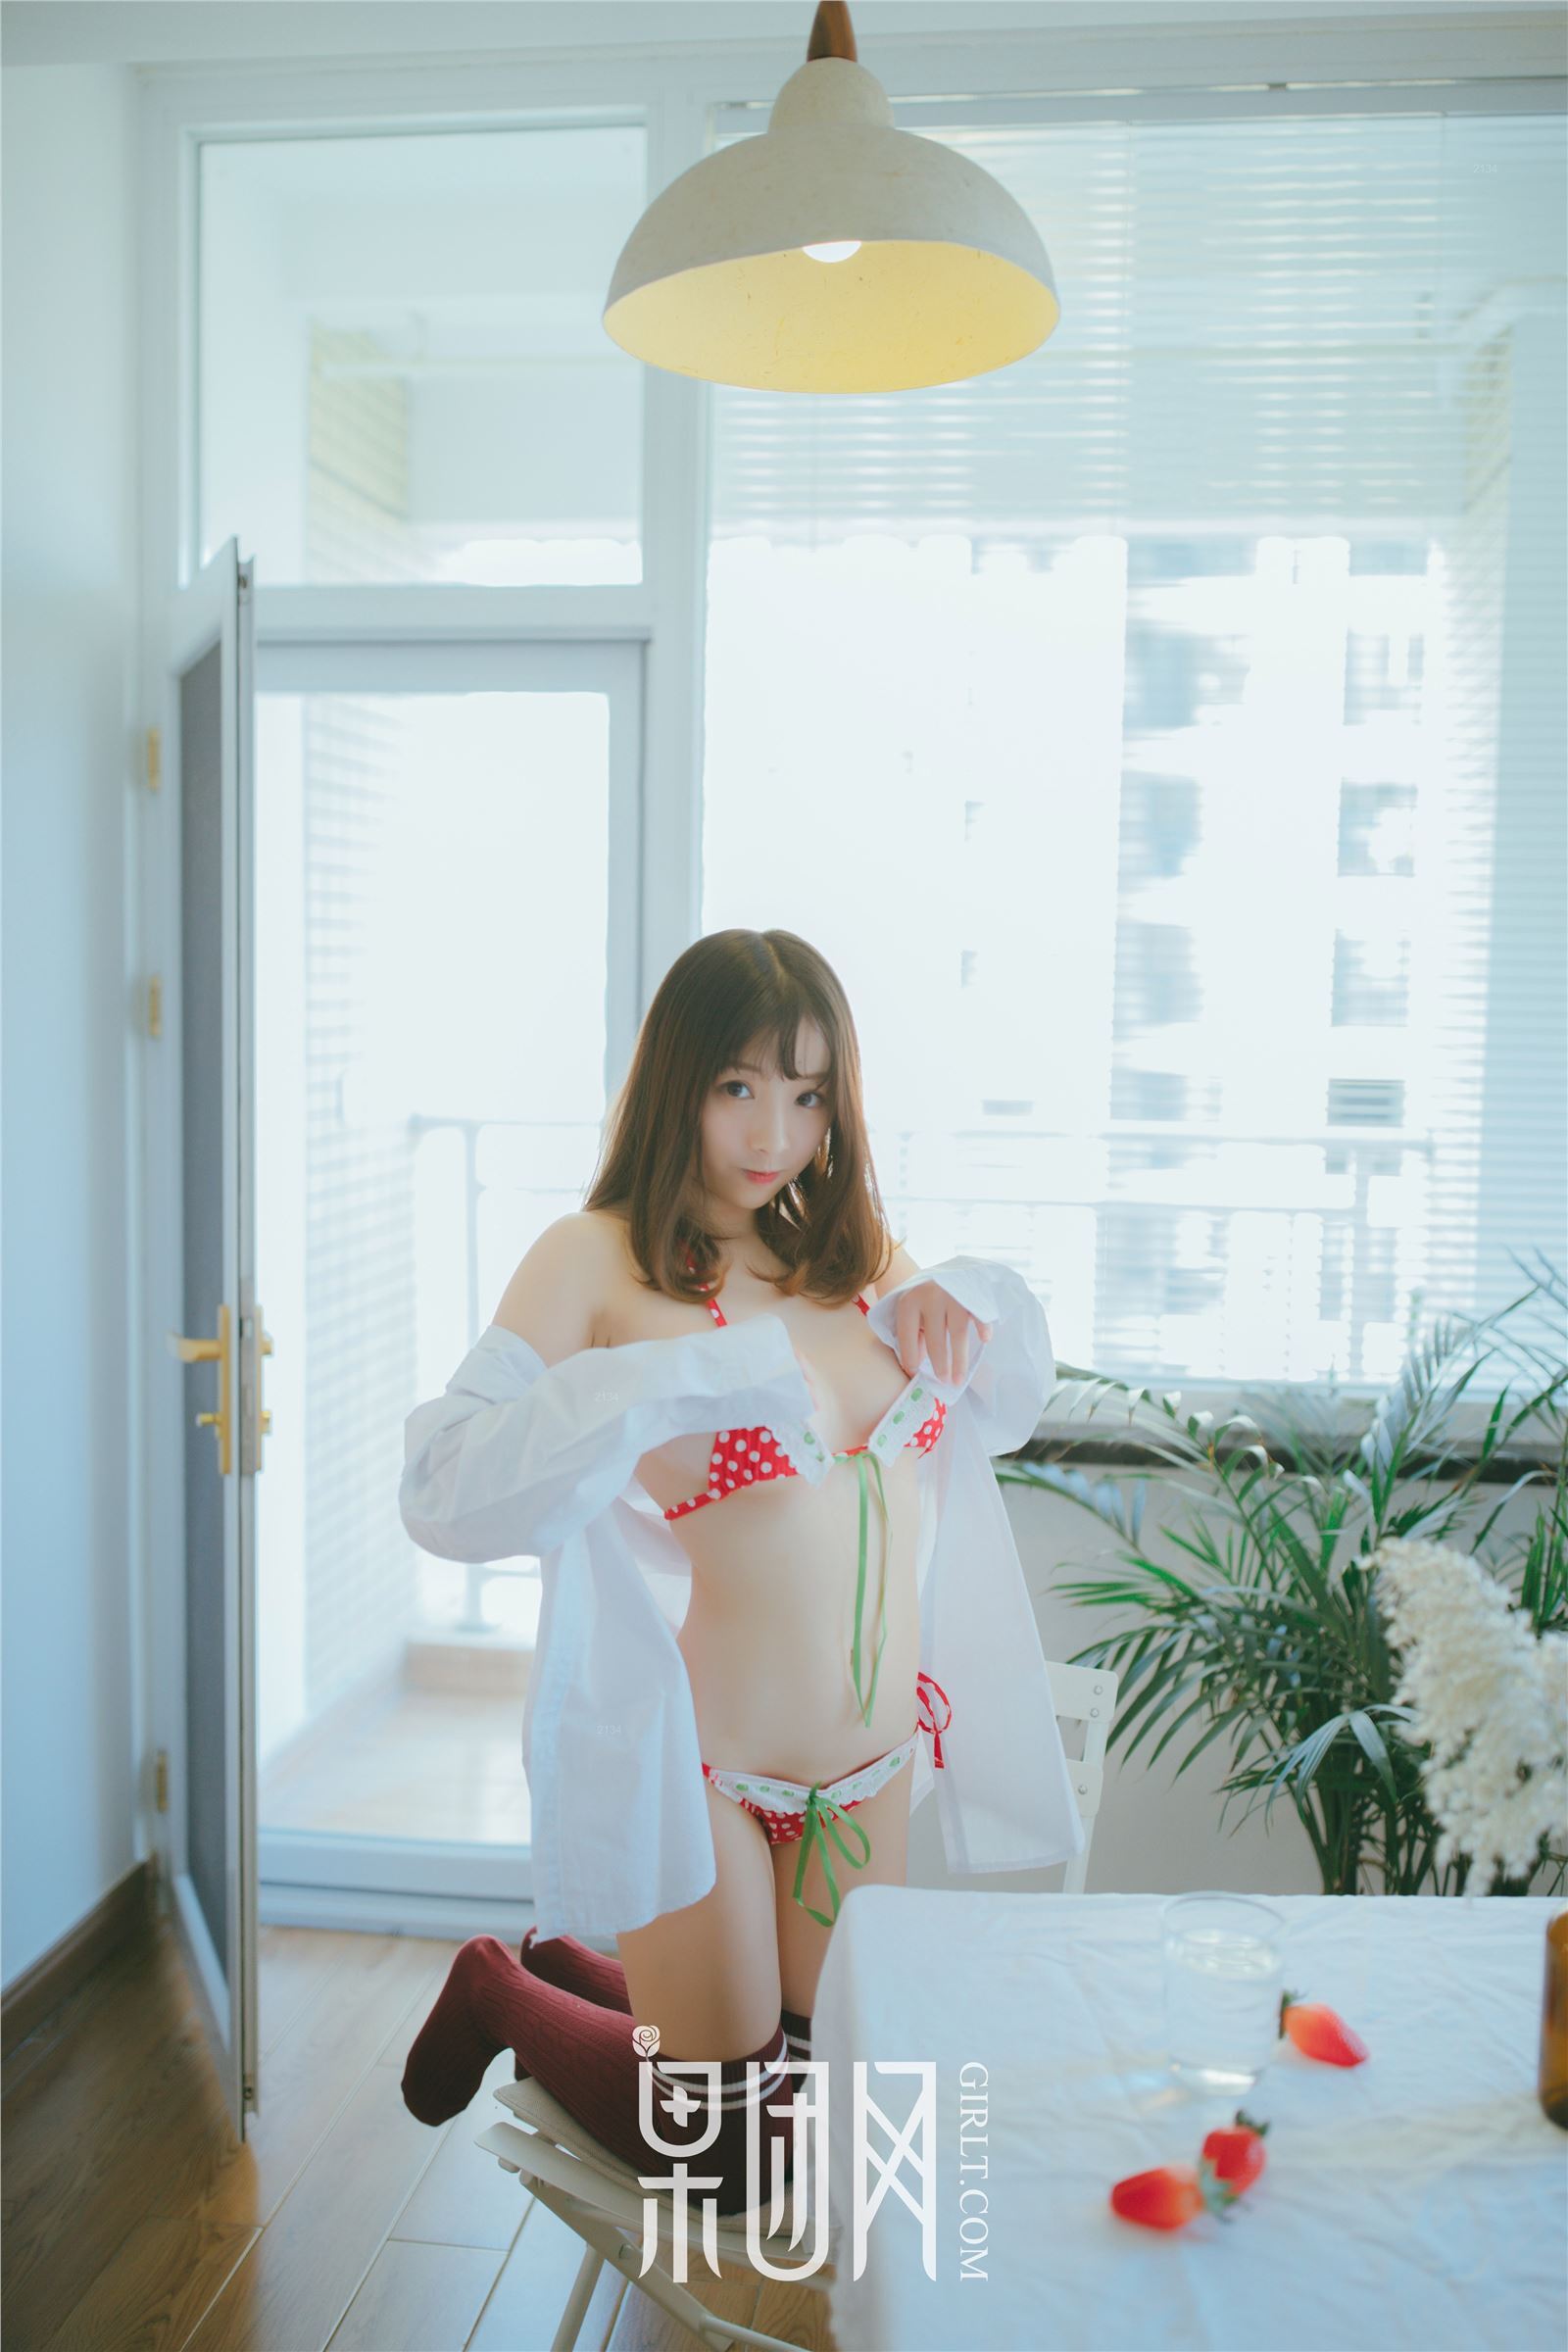 [Girlt fruit group website] March 18, 2018 Jixin kumagawa no.030 strawberry girl's sweet daily life